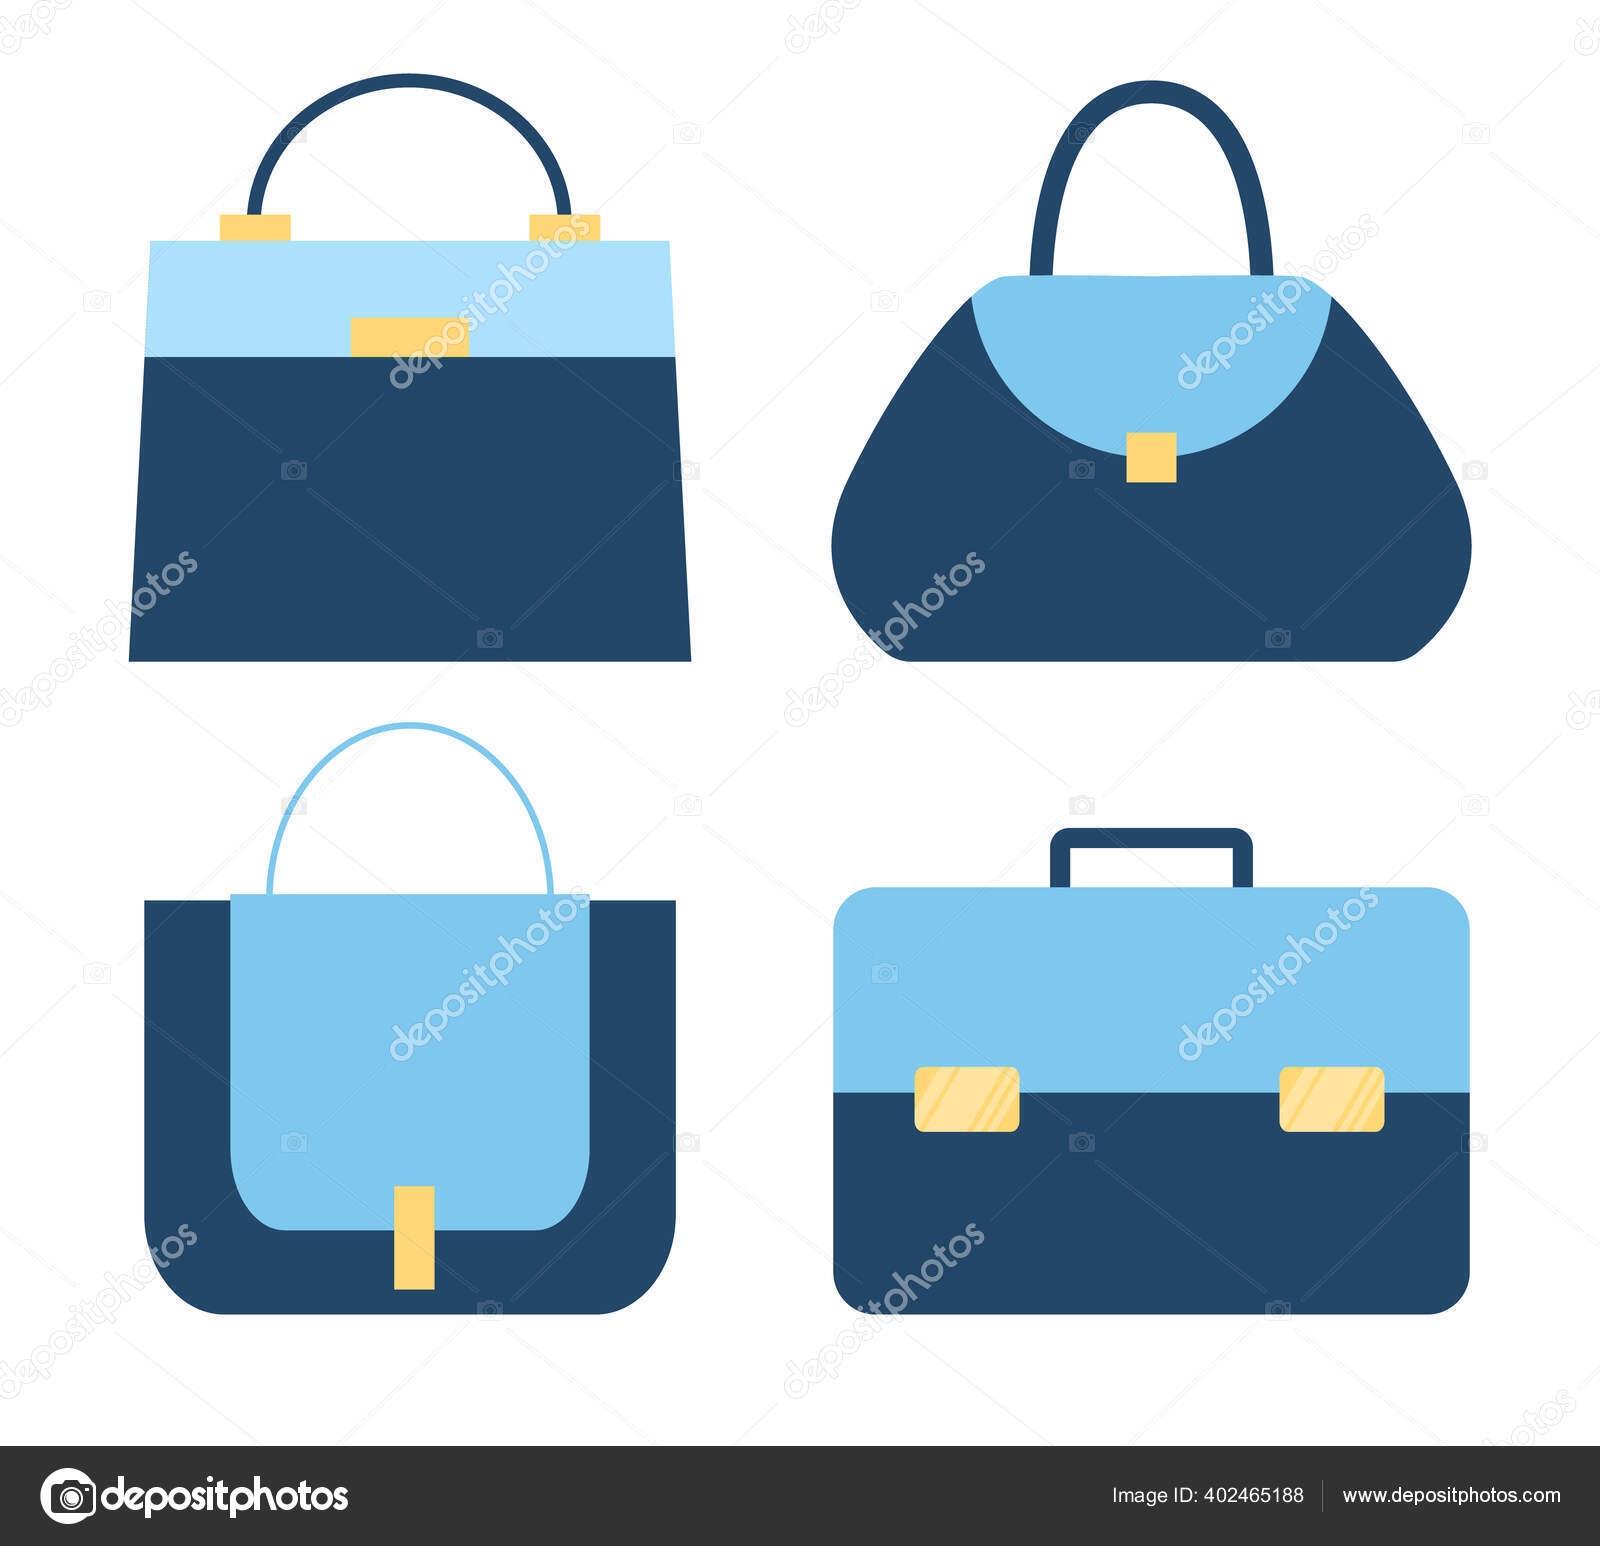 Latest Ladies Hand Bags design 2020 / Girls Stylish Purse & Handbags  Collection #handbag #handbags | Crossbody bag, Handbag, Fashion bags